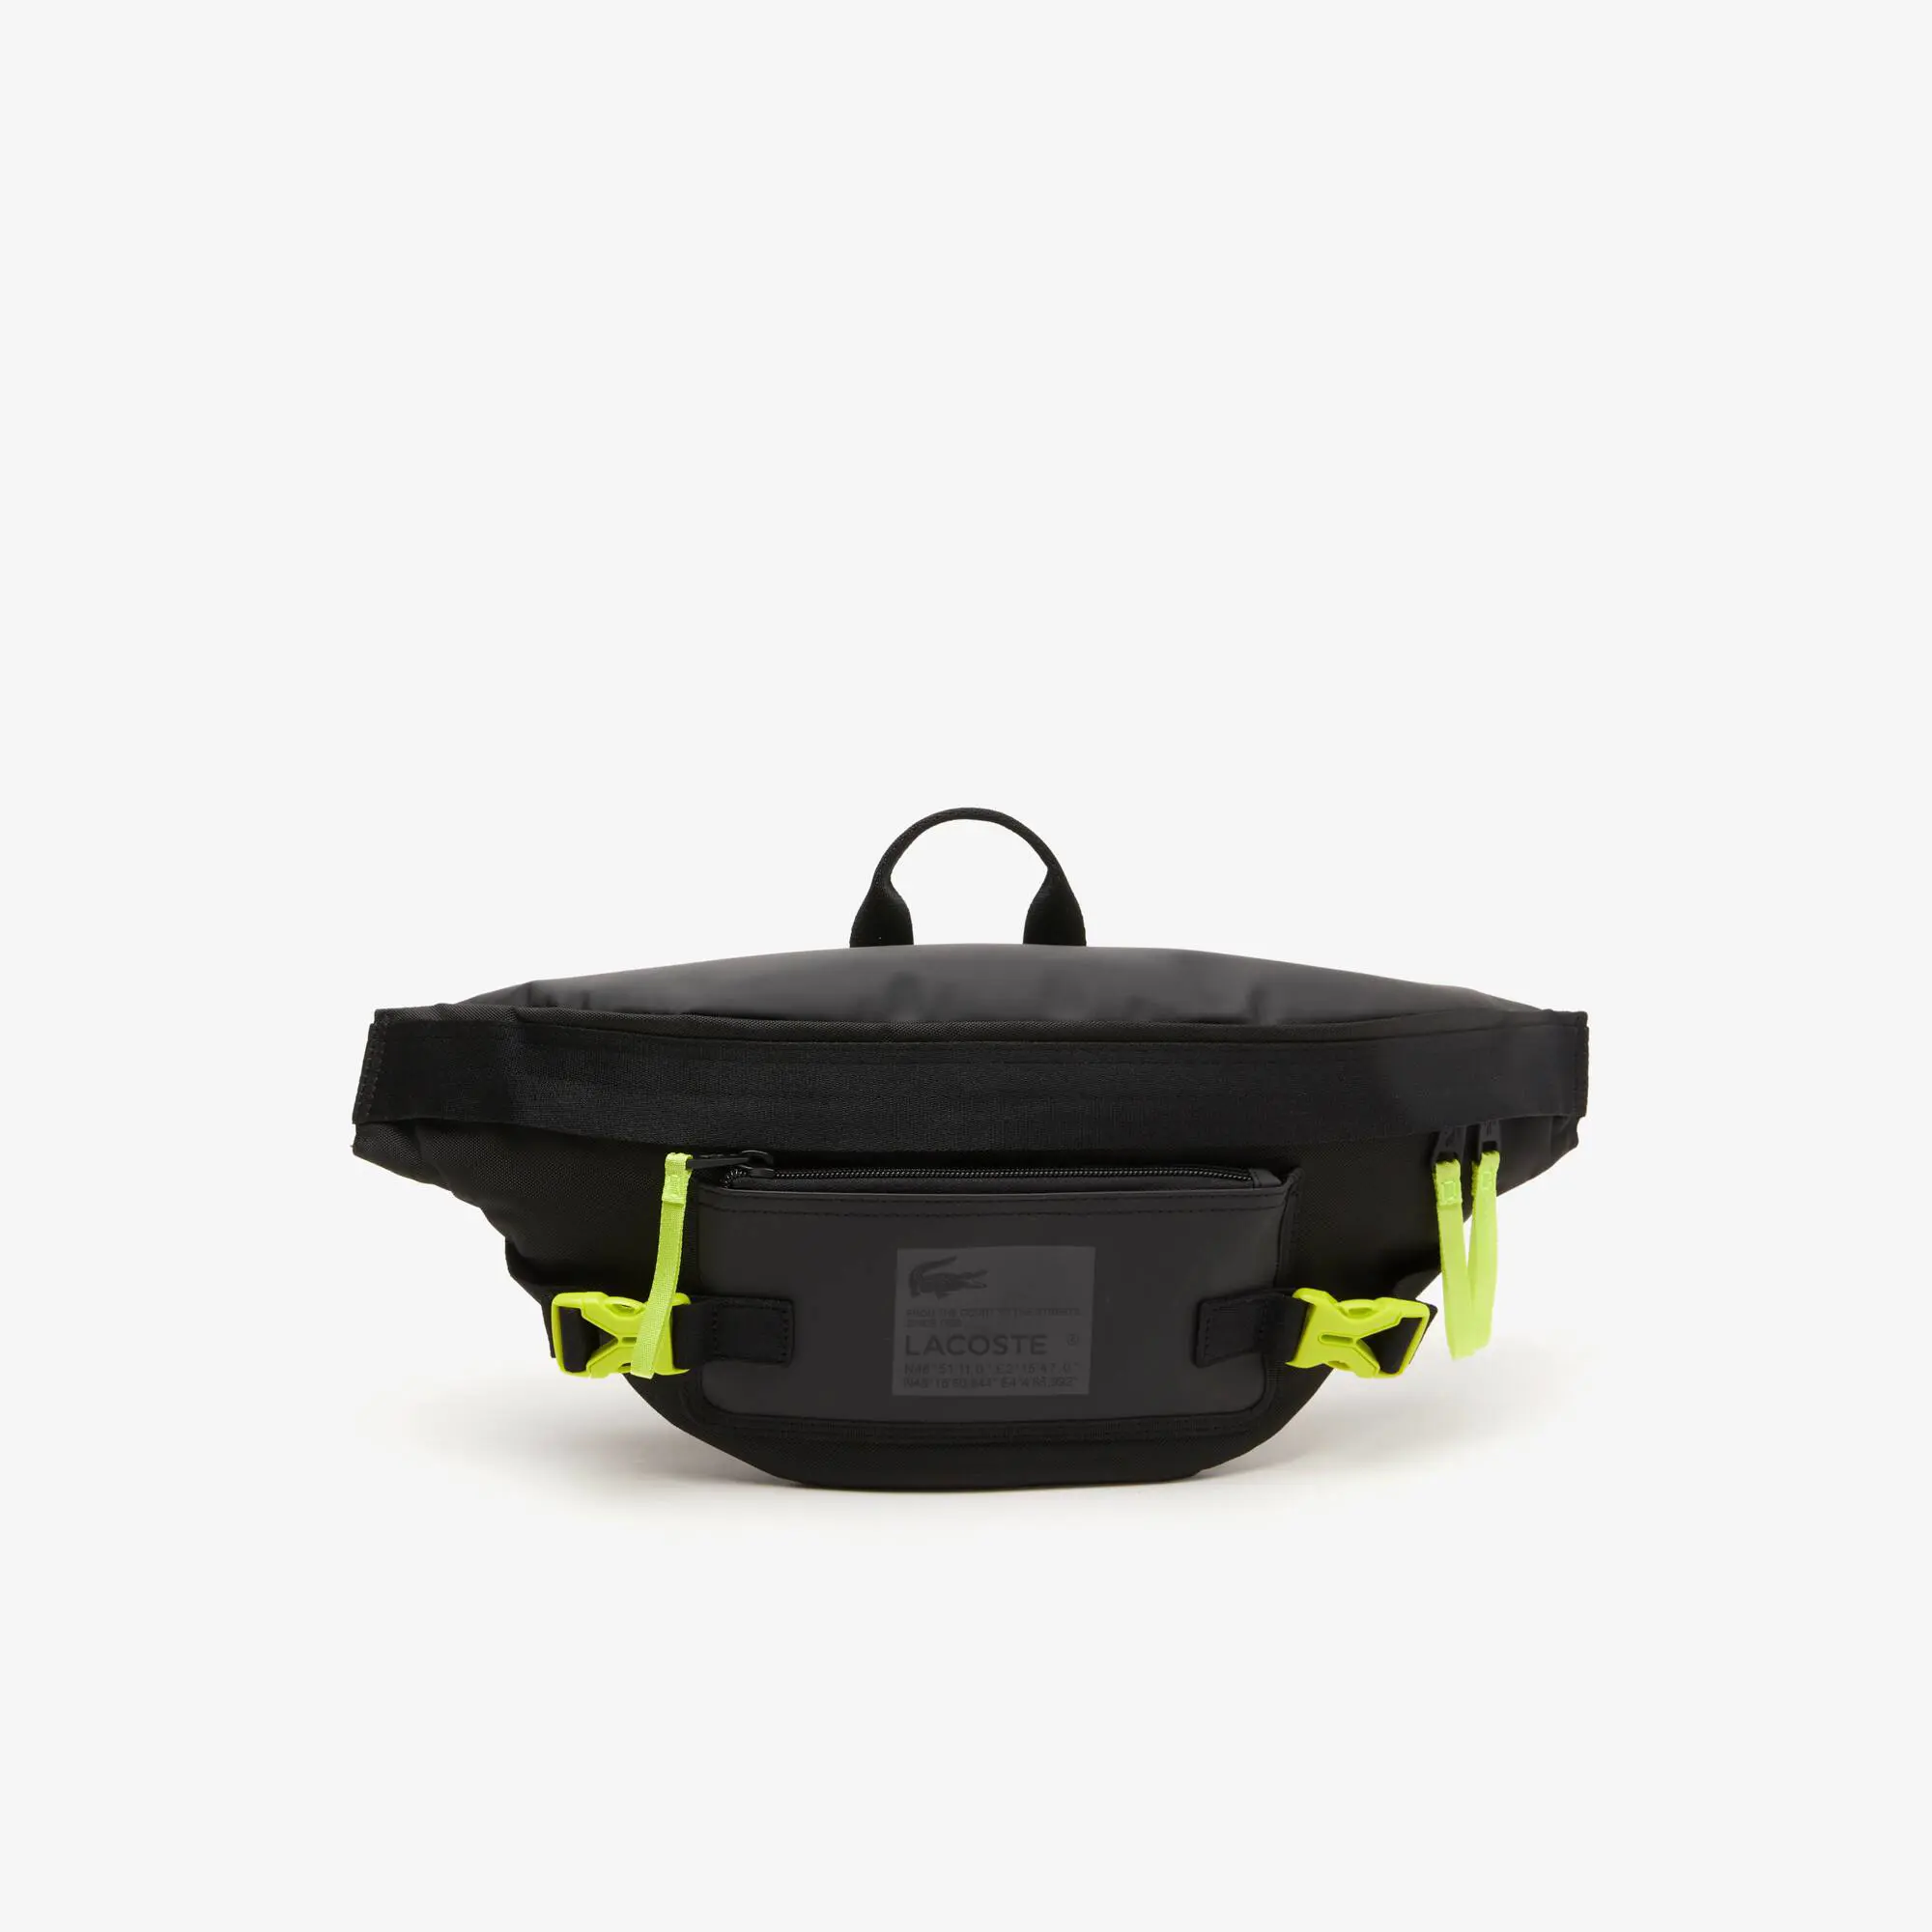 Lacoste Men’s Lacoste Showerproof Belt Bag. 1